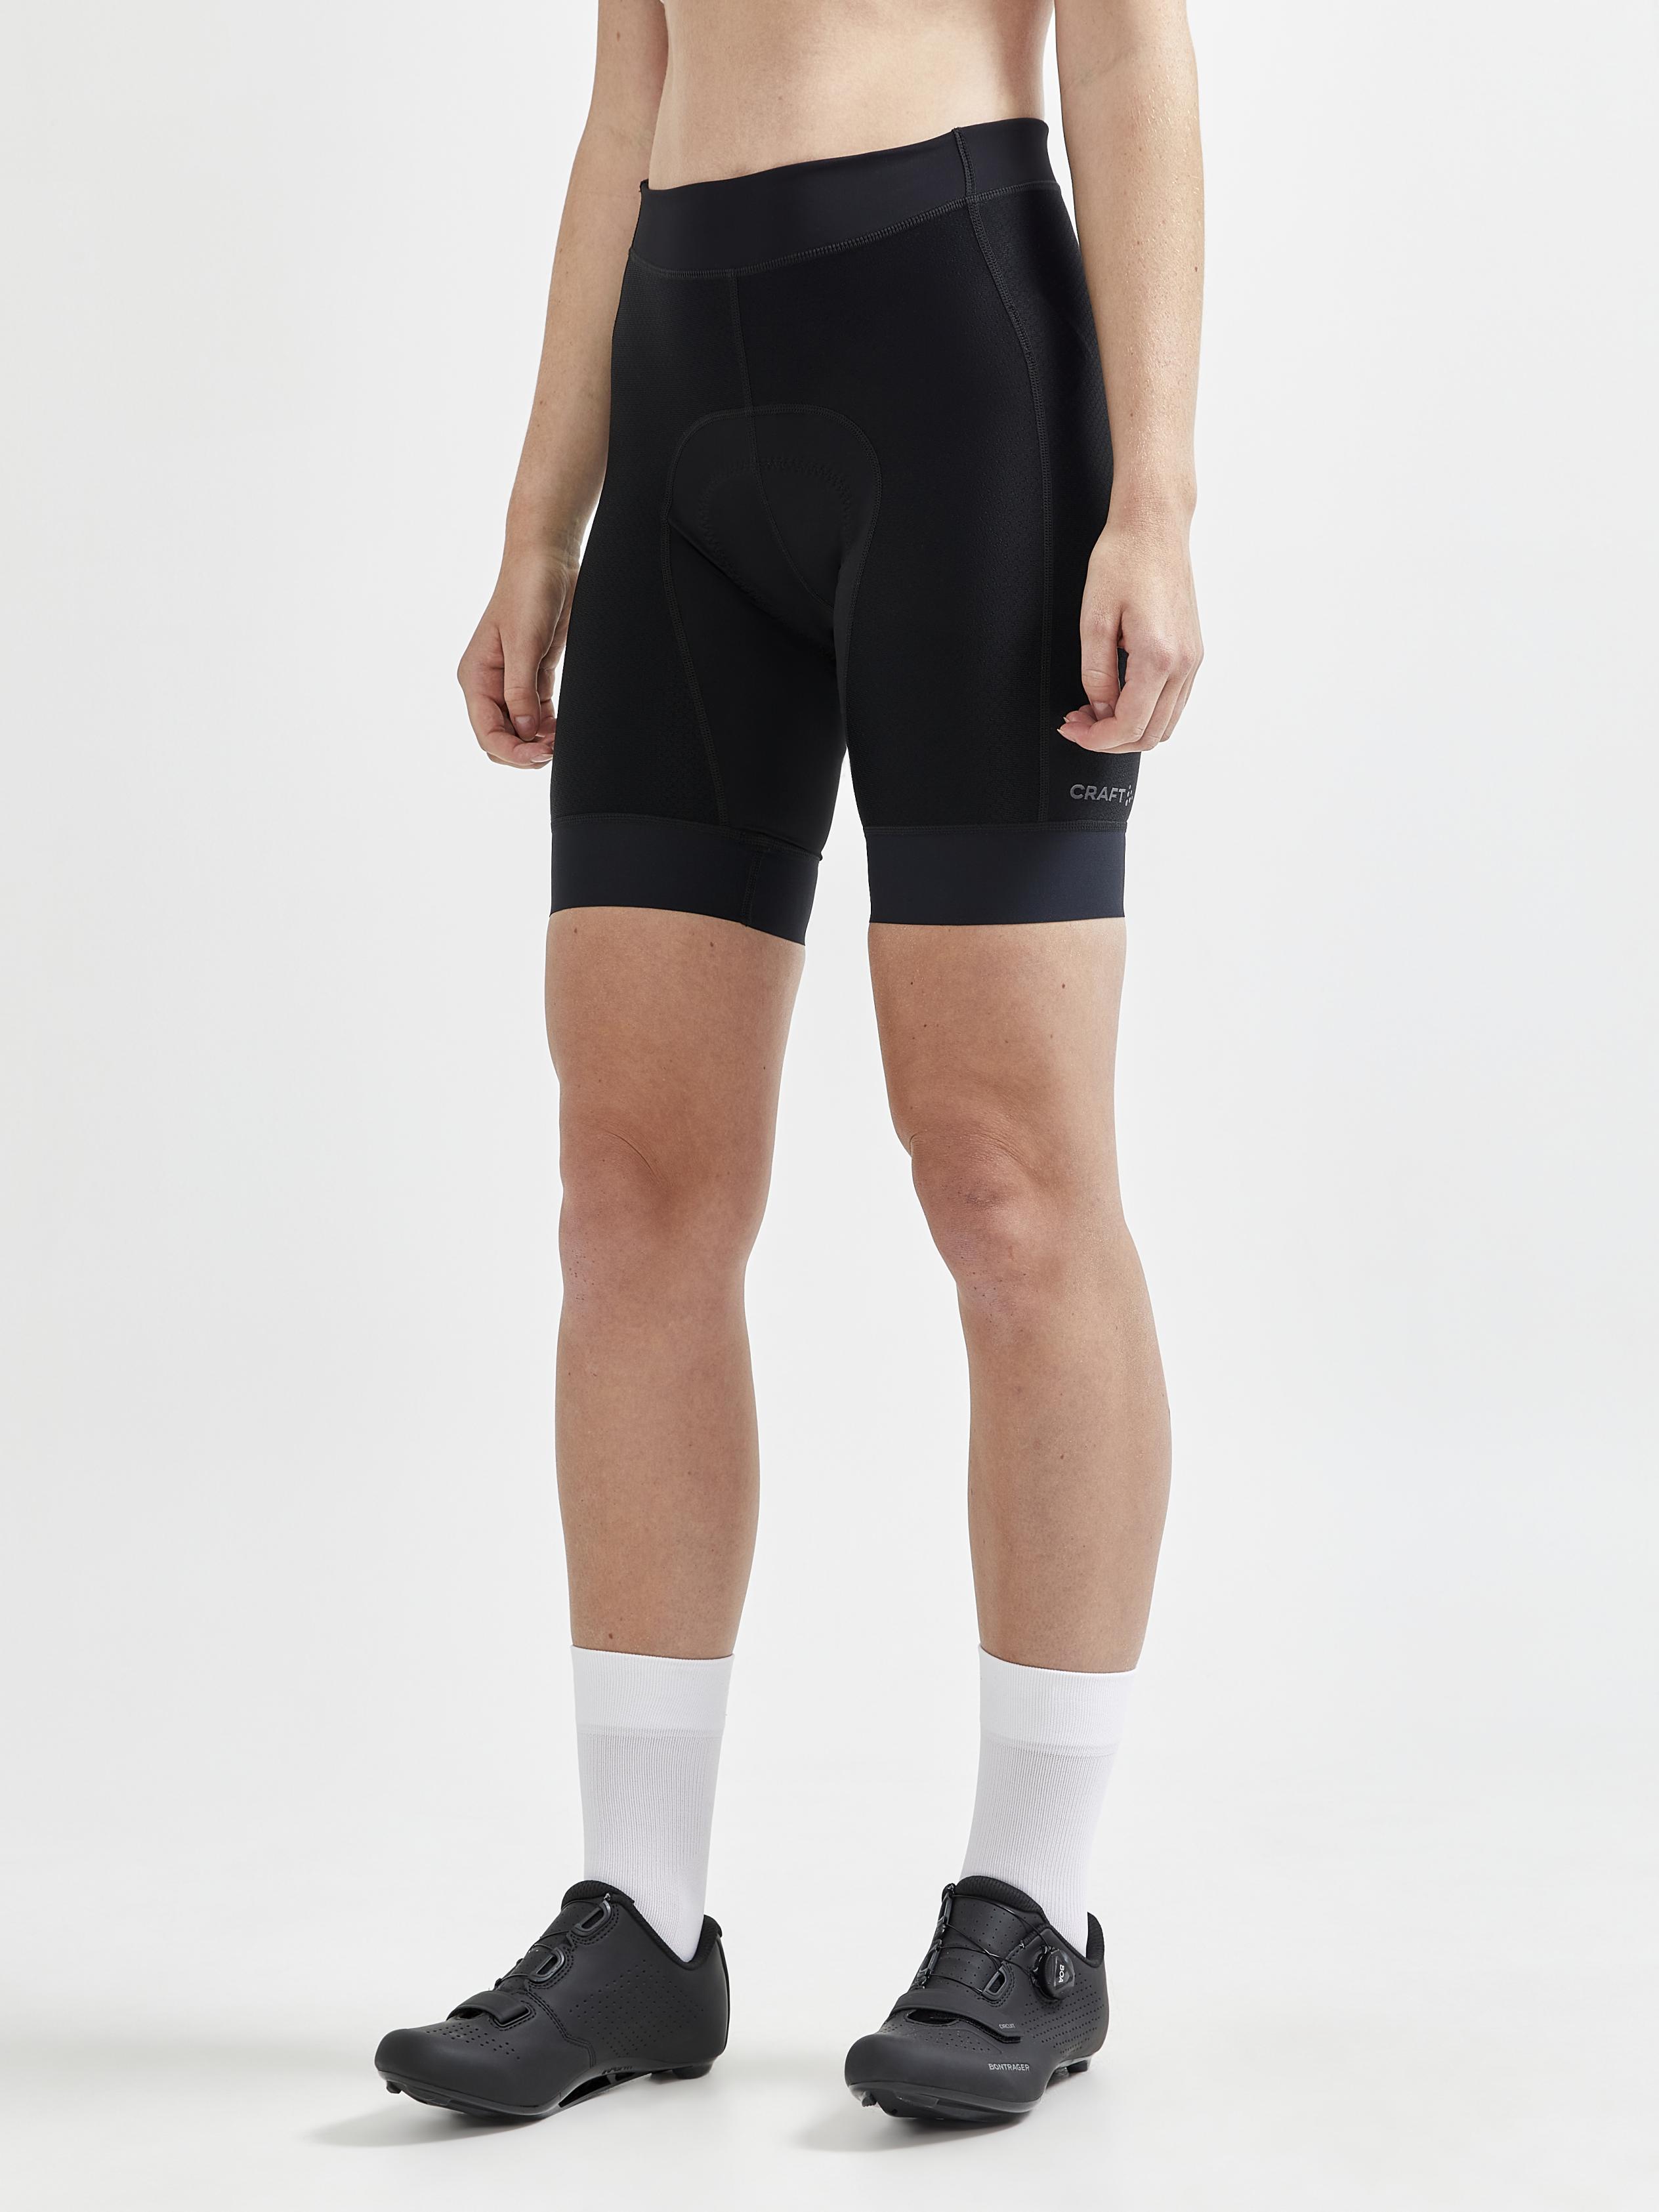 Free bike bermuda shorts with mesh underwear